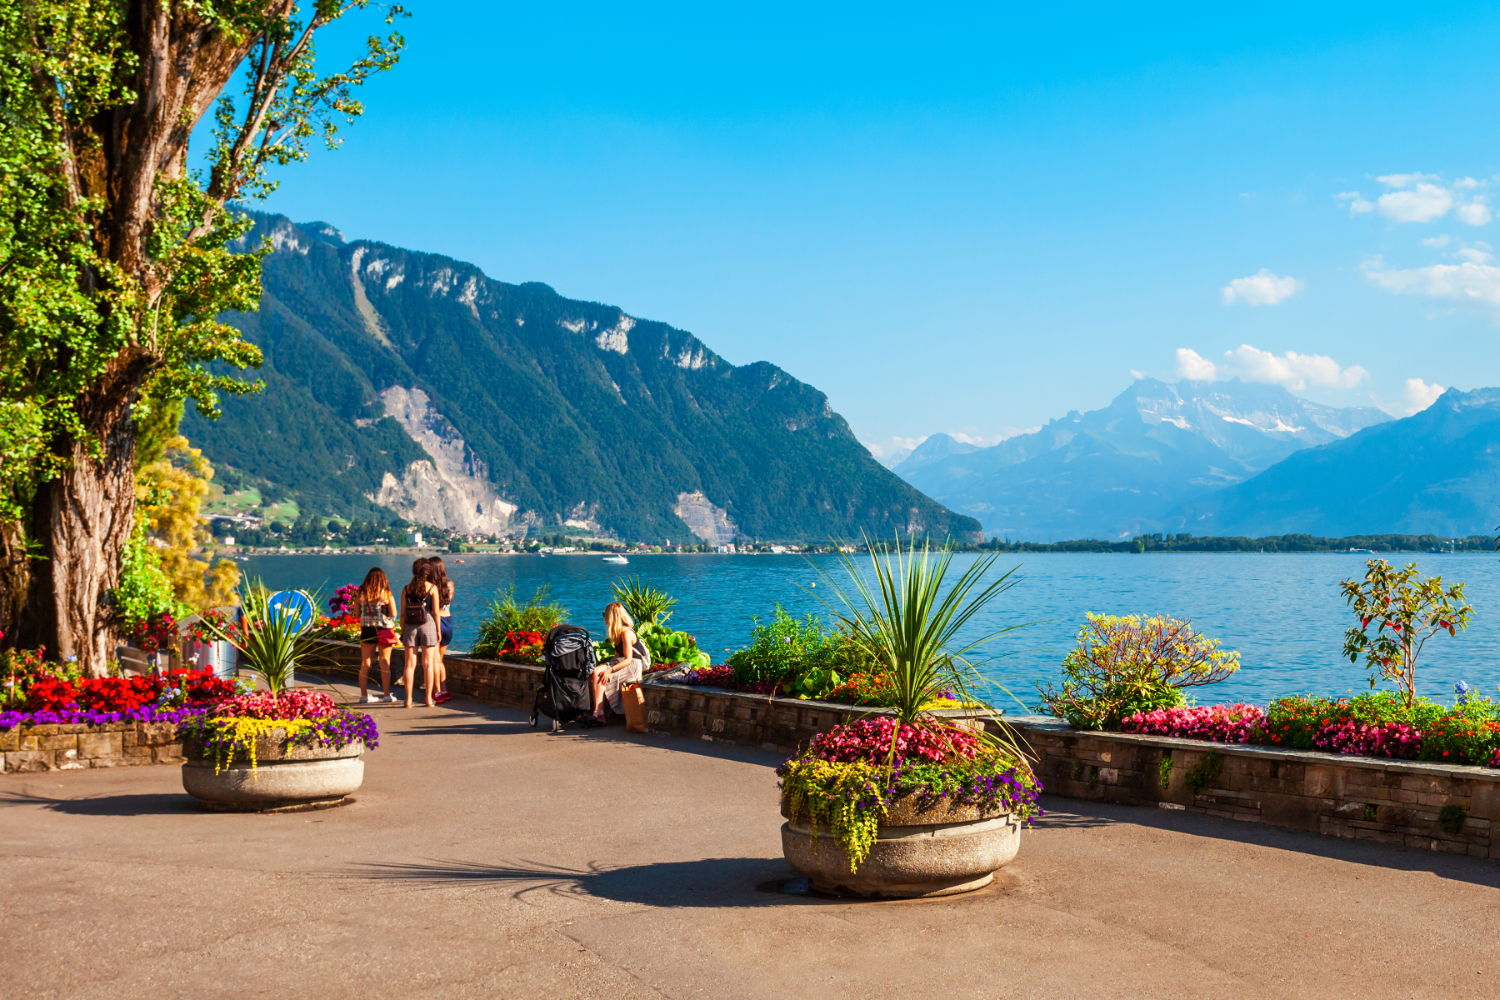 The lake promenade in Montreux